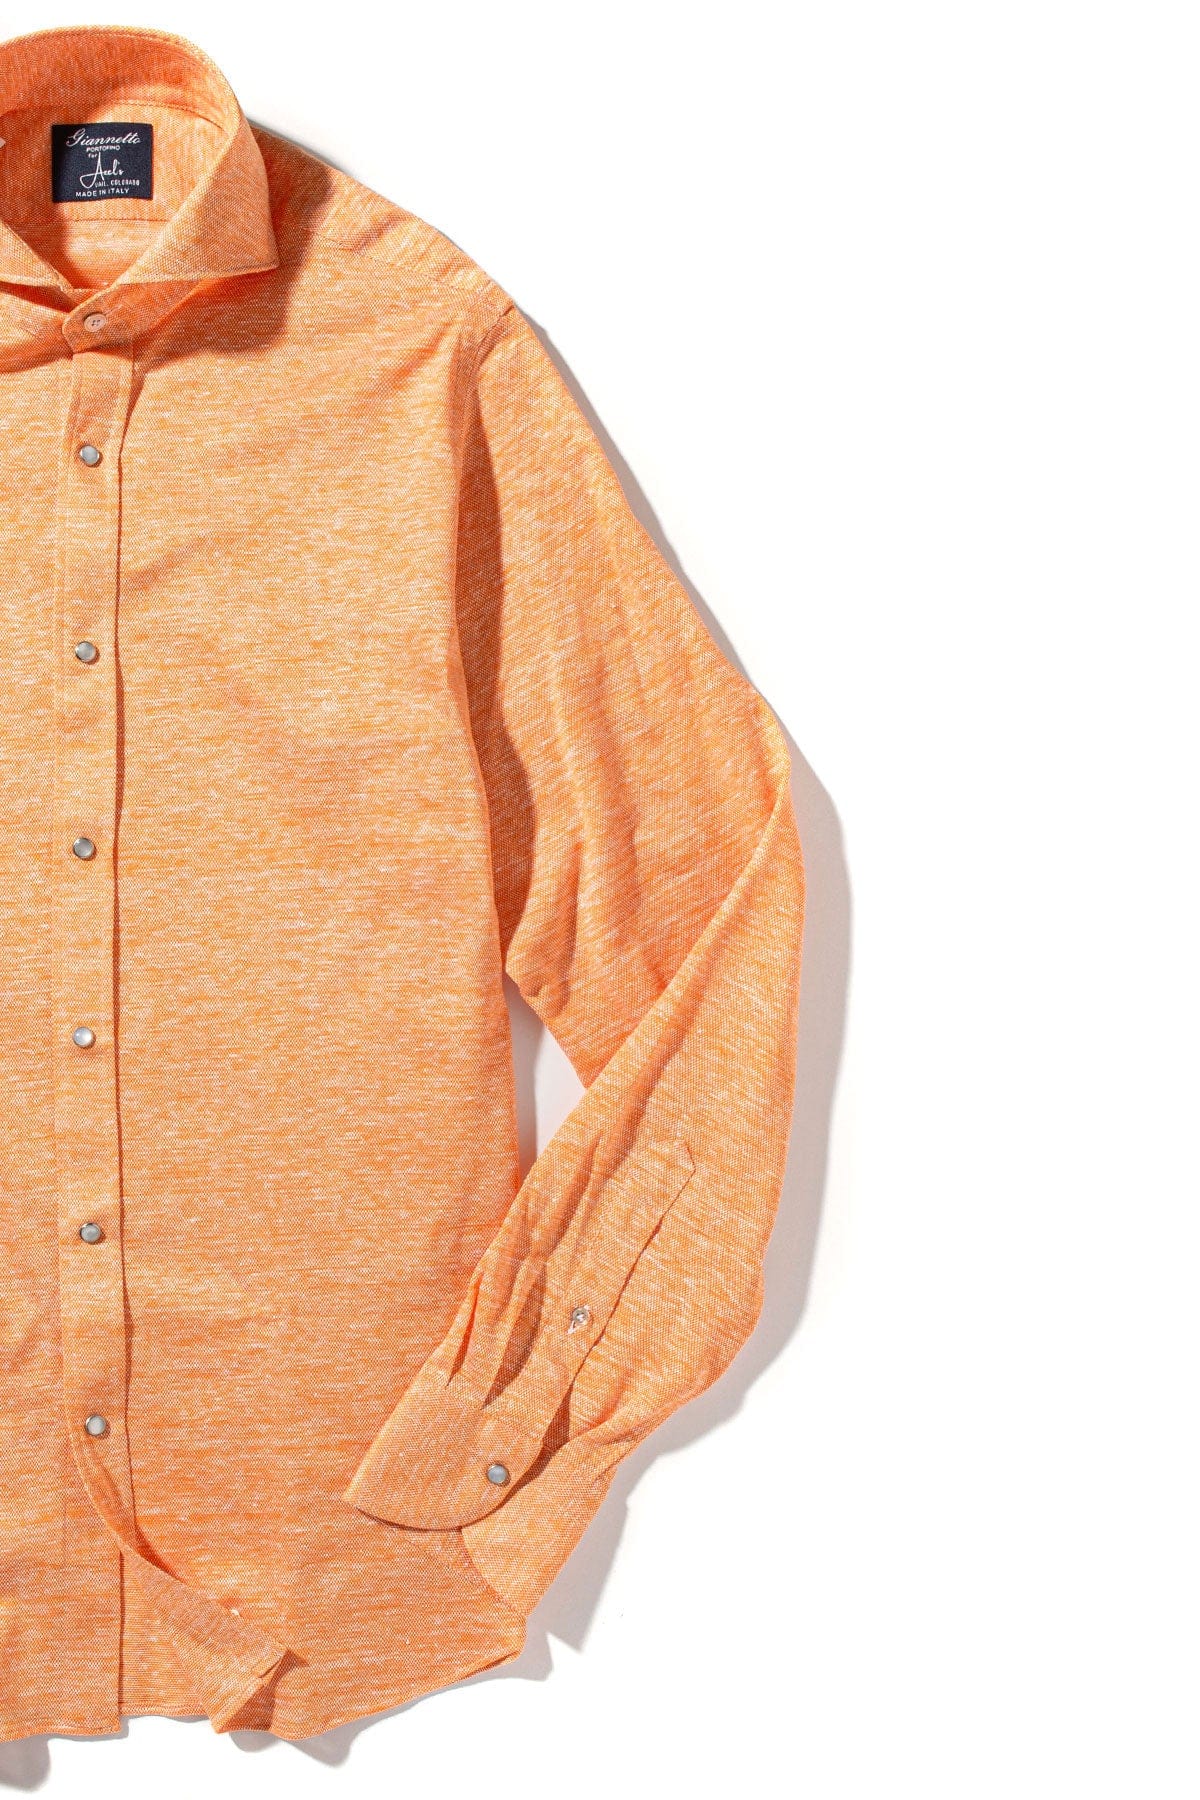 Schwinn Cotton Linen Shirt in Orange - AXEL'S